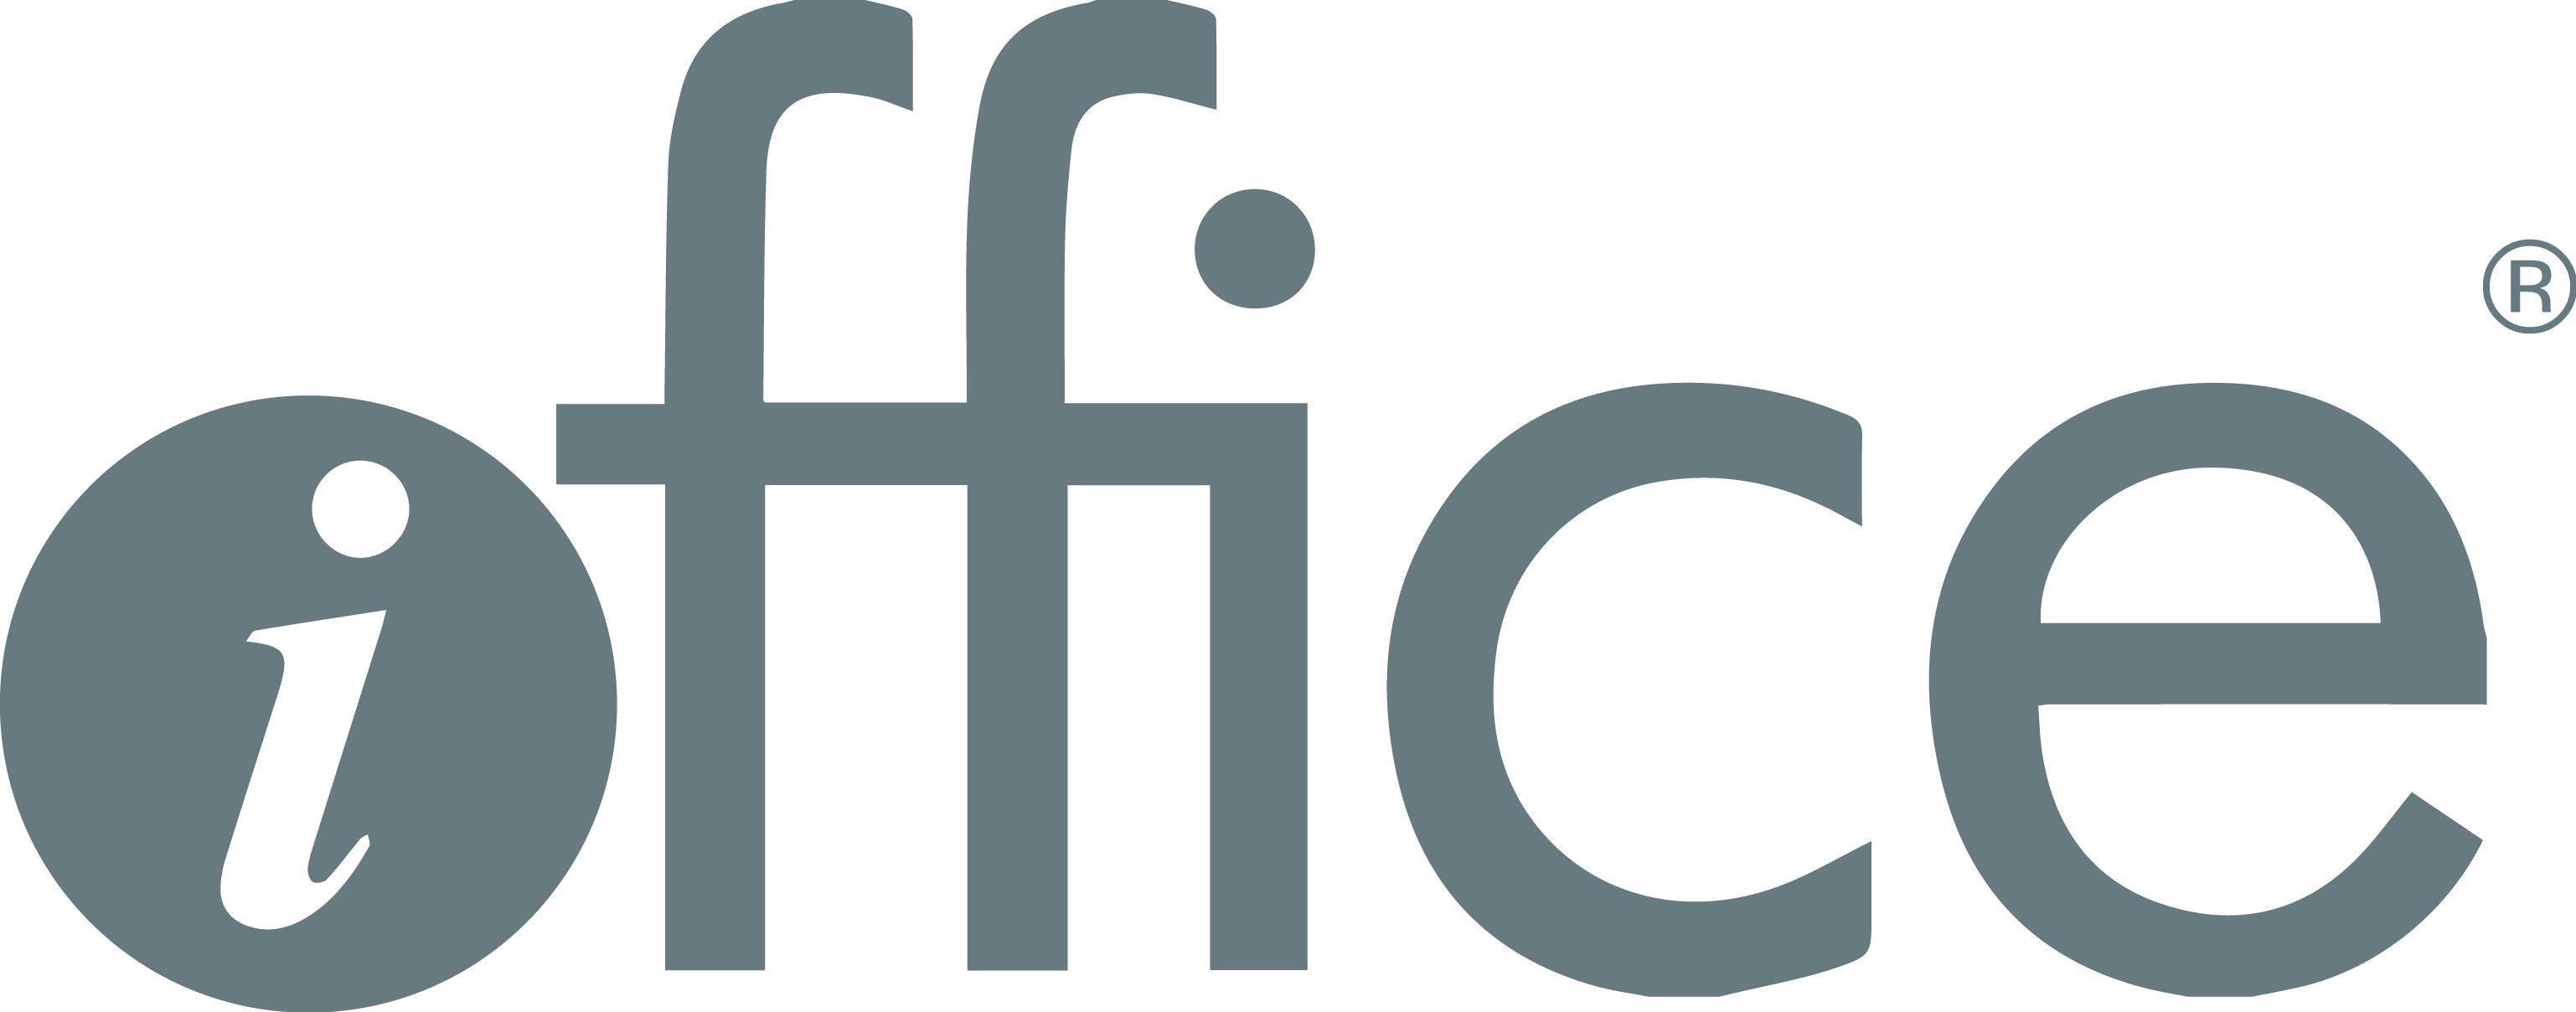 iofficecorp logo